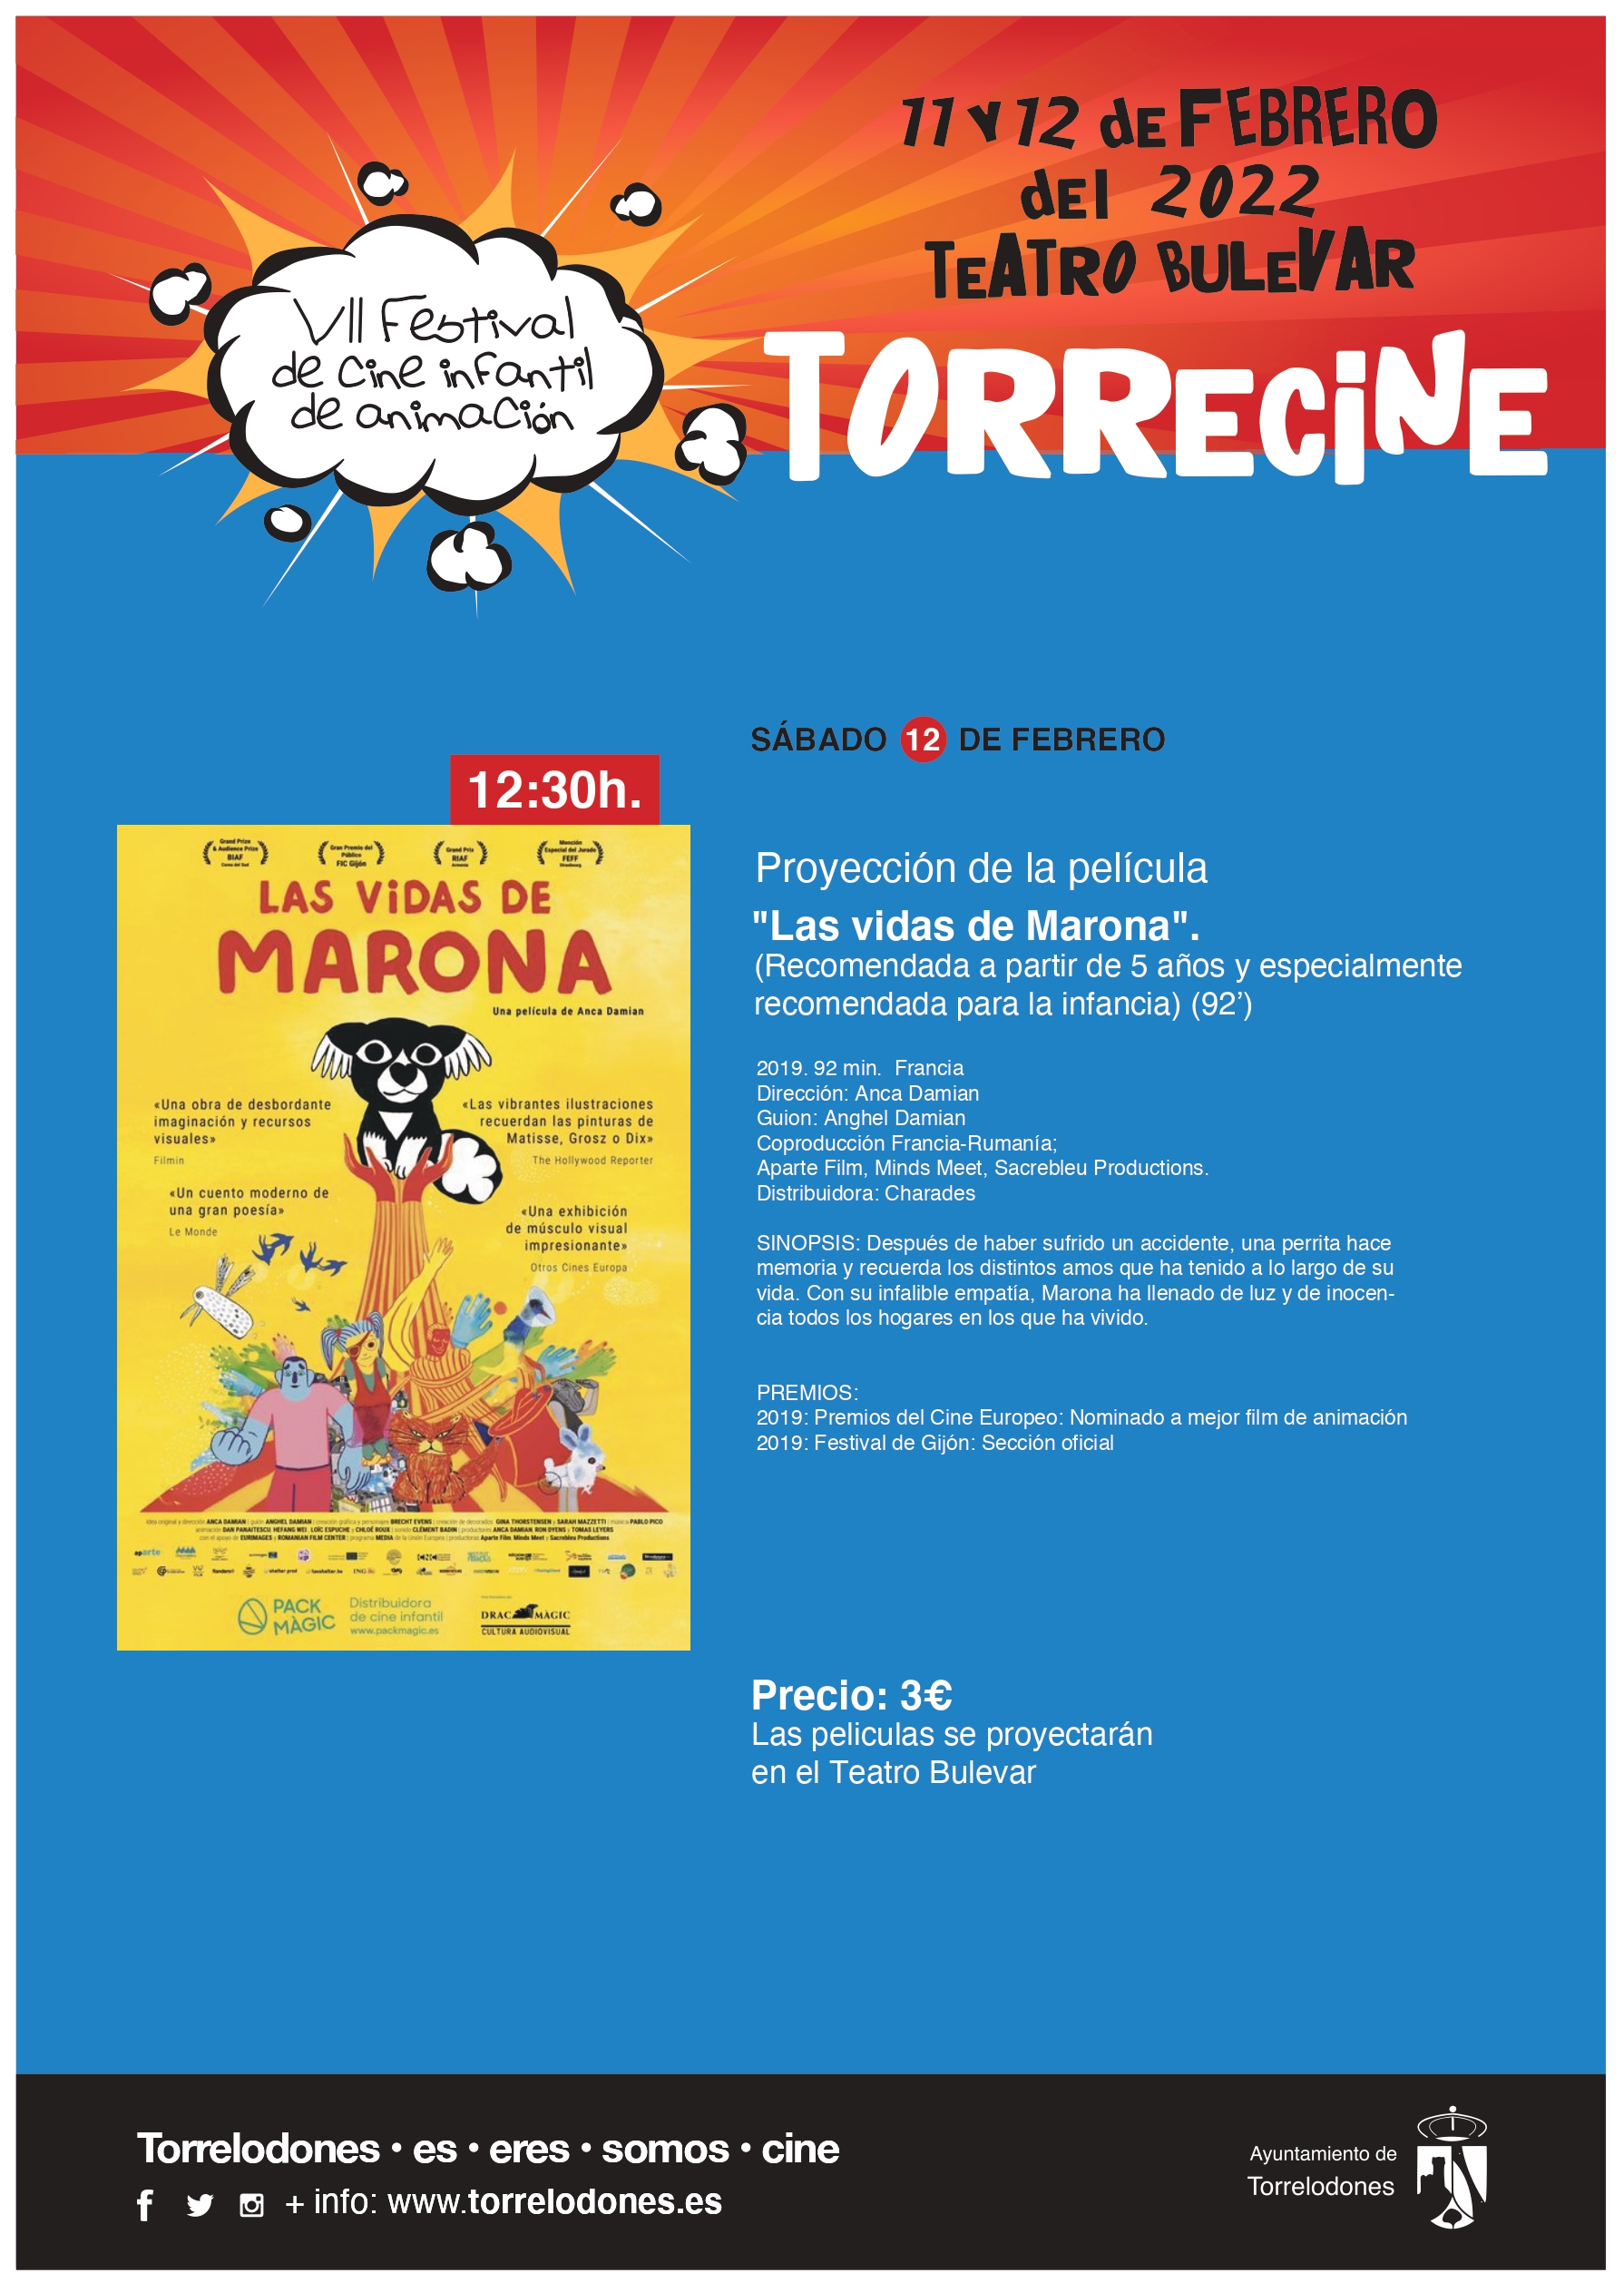 torrecine 18 01 22 5 page 0001